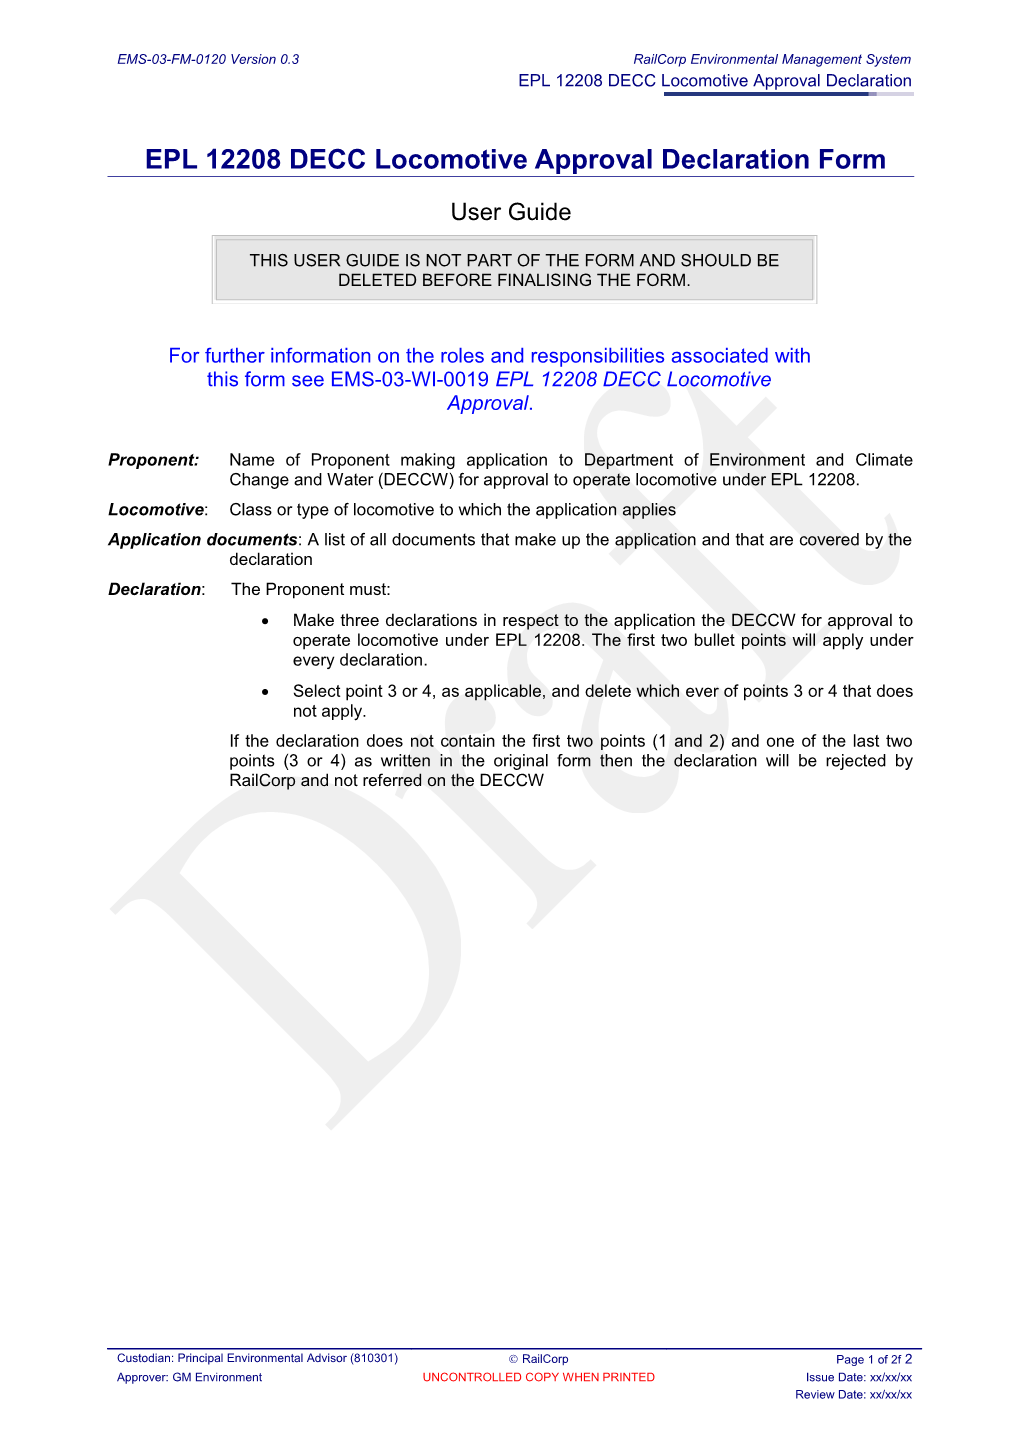 DECC Locomotive Approval Declaration Form